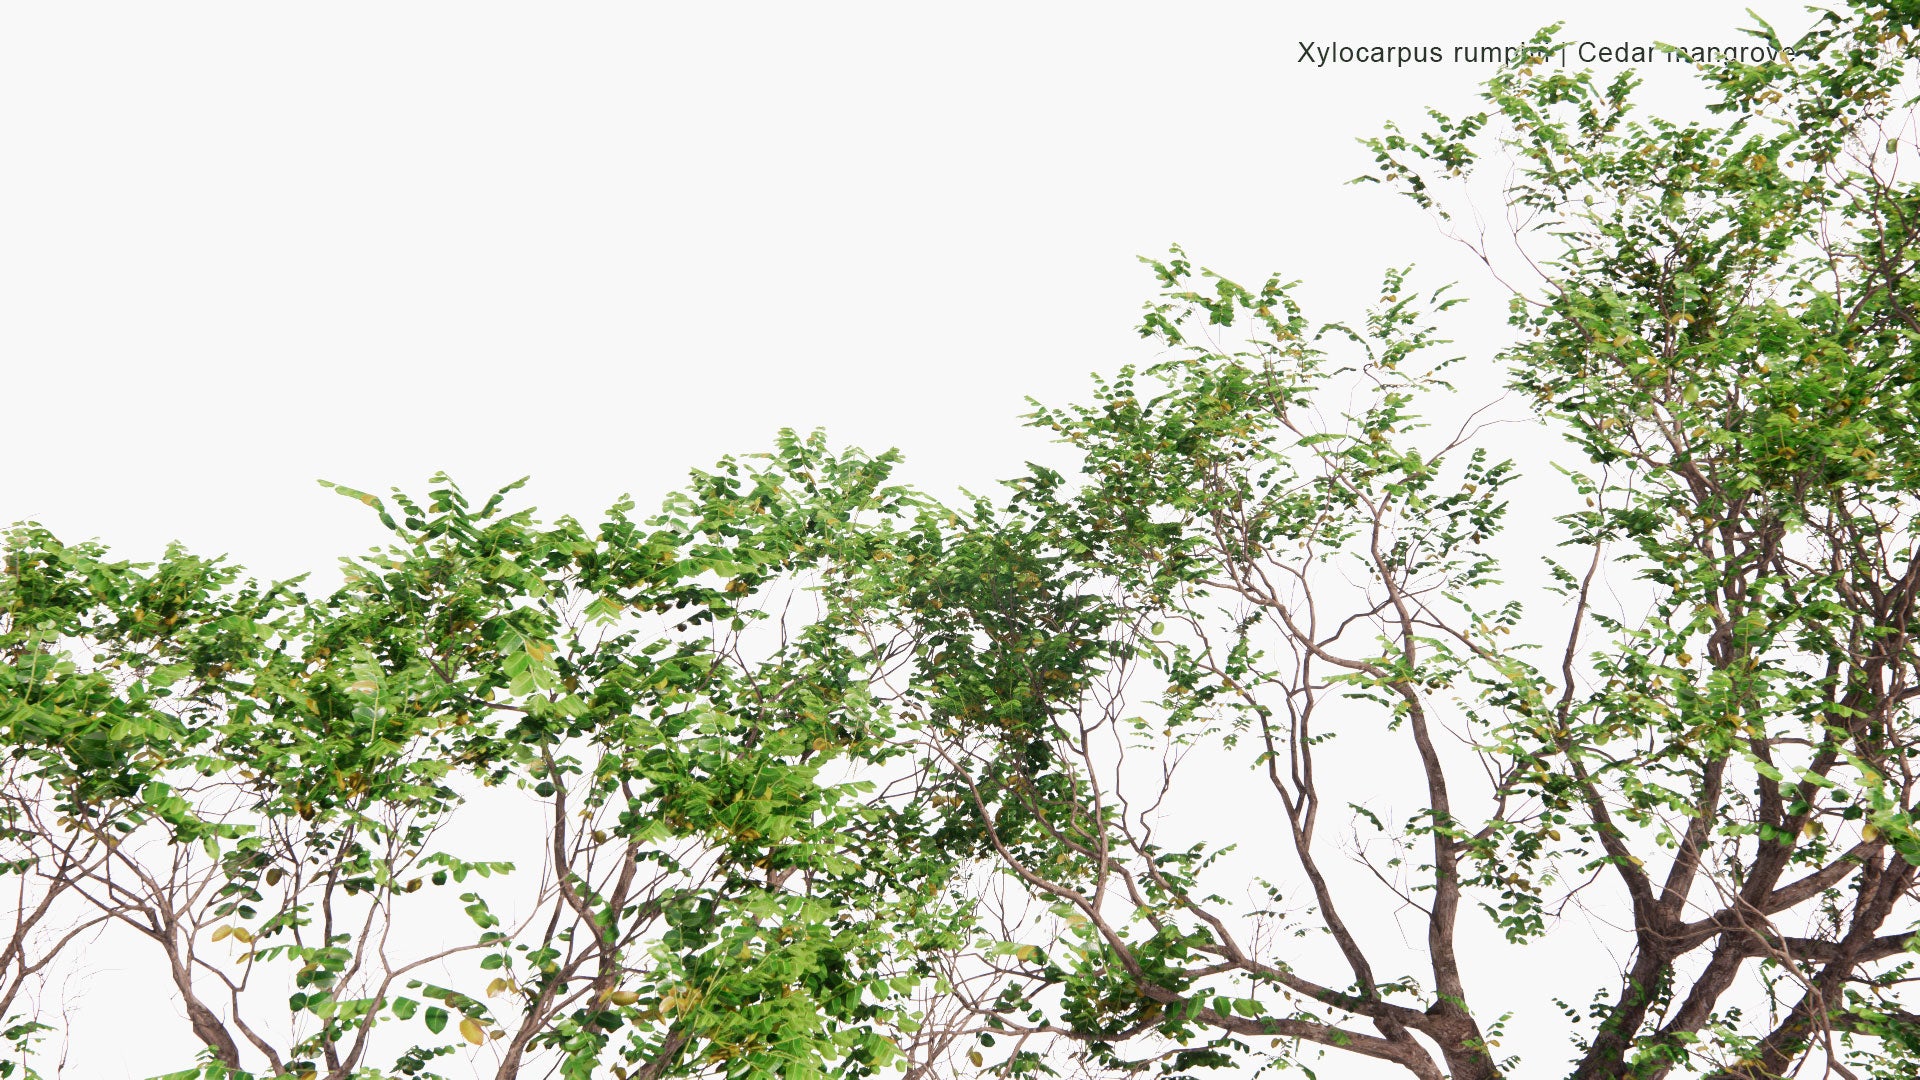 Low Poly Xylocarpus Rumphii - Cedar Mangrove (3D Model)